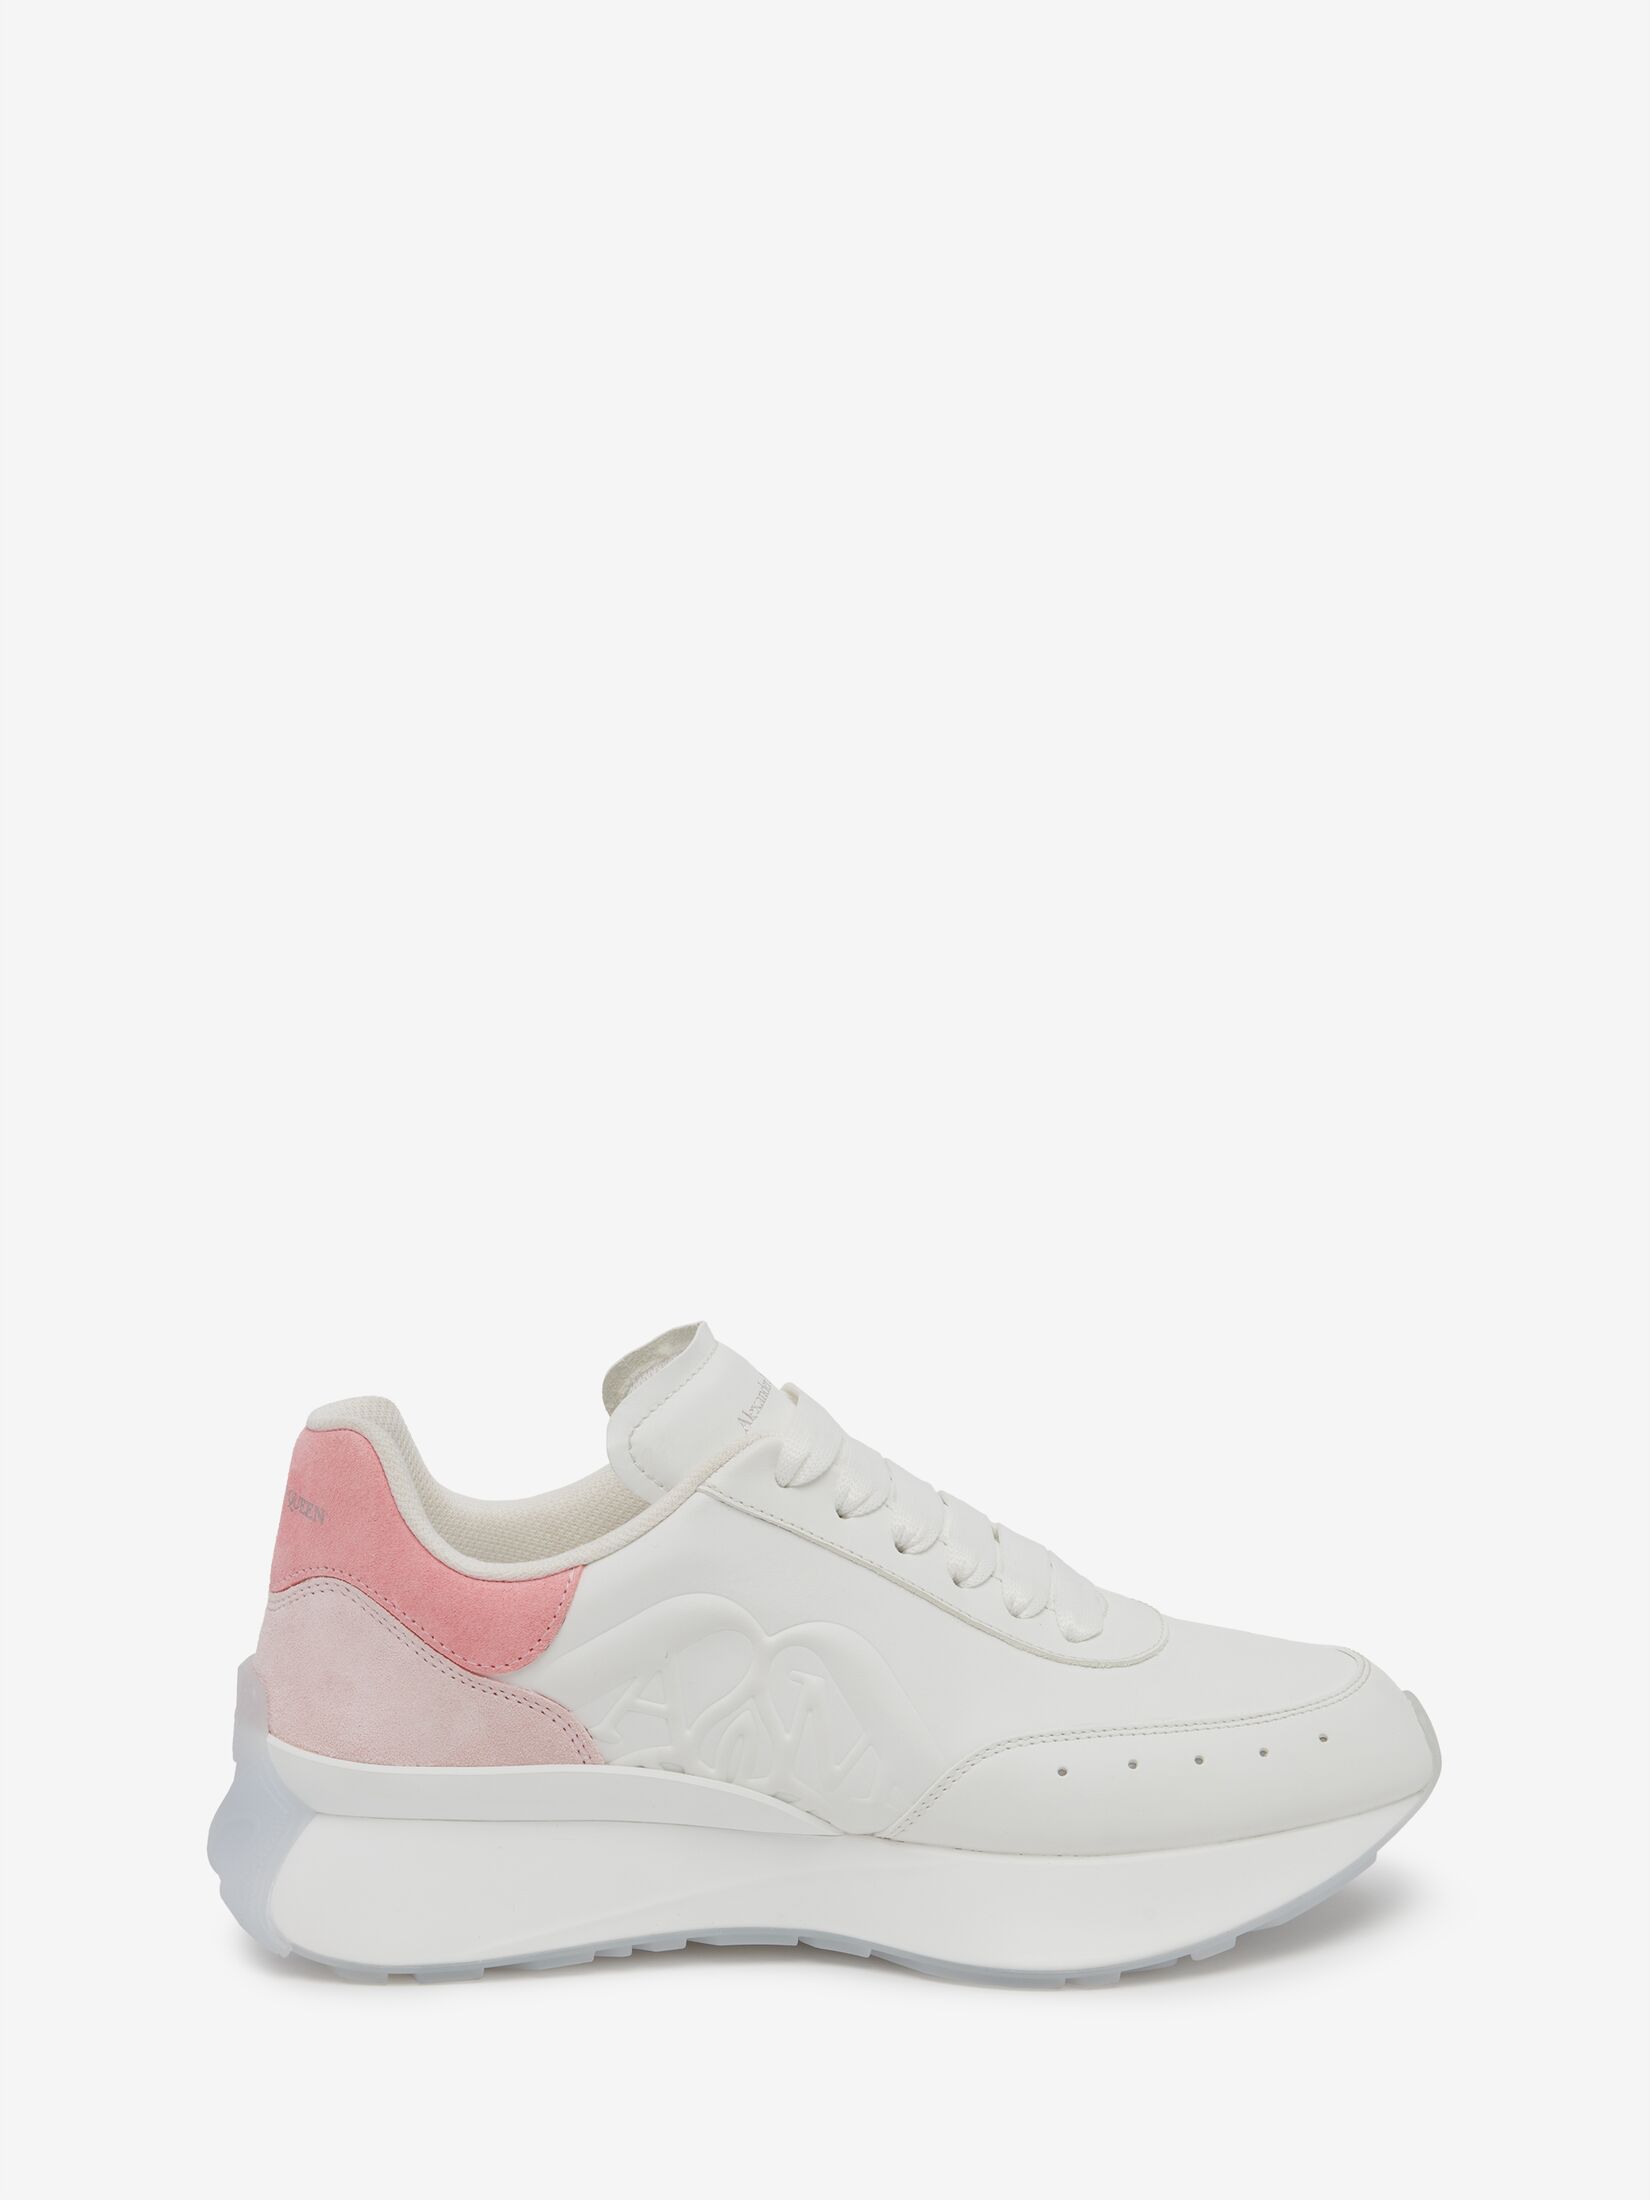 Alexander McQueen Oversized Women's Sneakers Size 40 EU / 10 US White Pink  | eBay